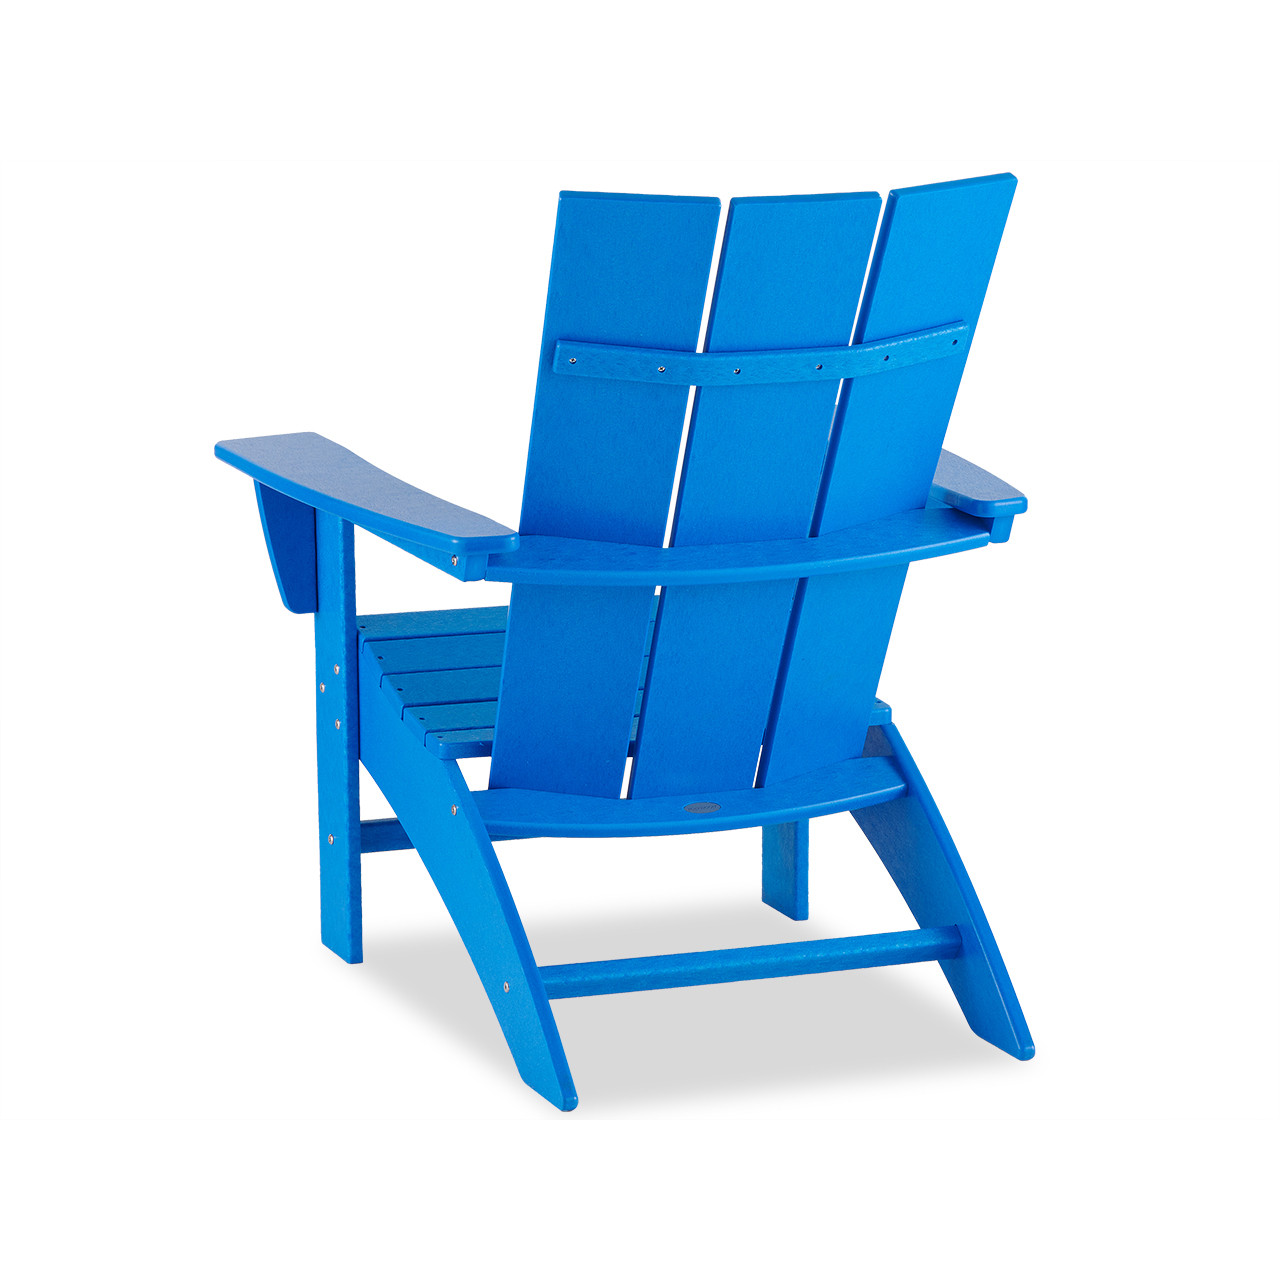 POLYWOOD Polymer Modern Adirondack Chair